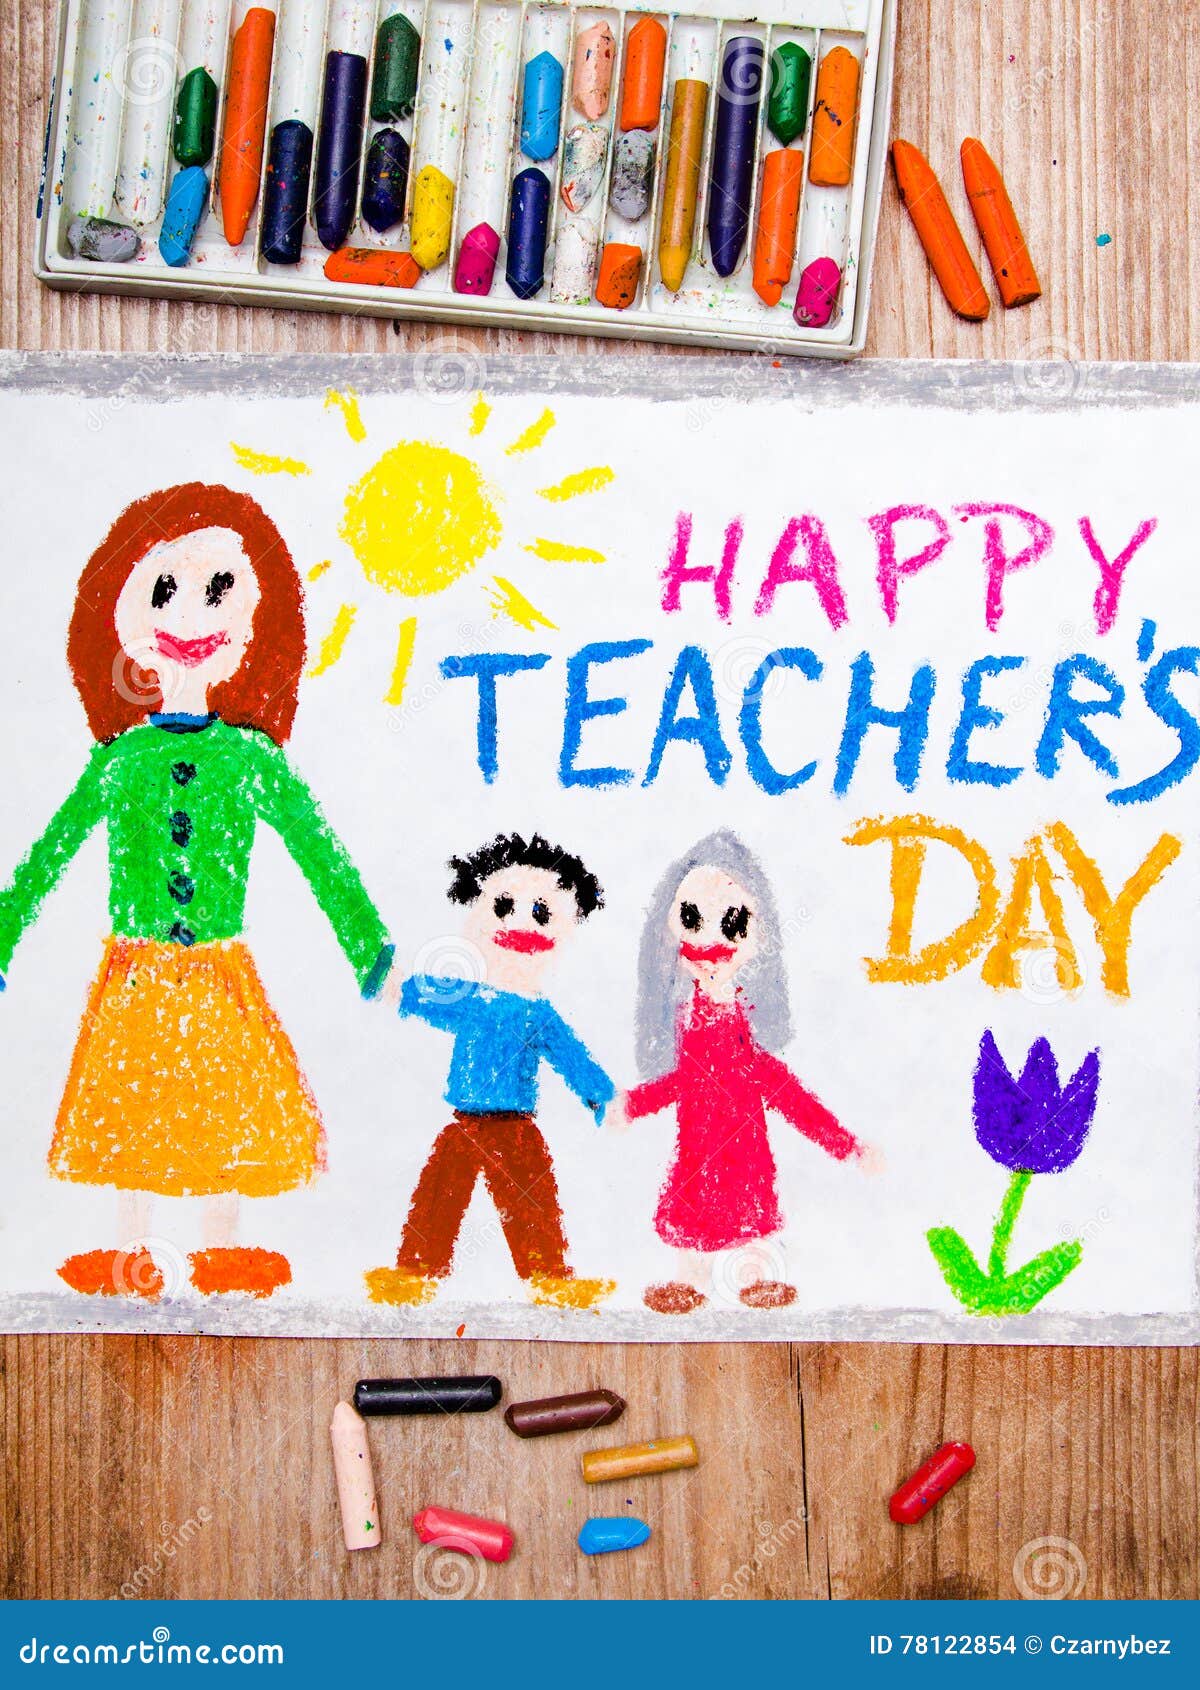 Happy teacher's day wishes Painting by Vaishnav Eacharath